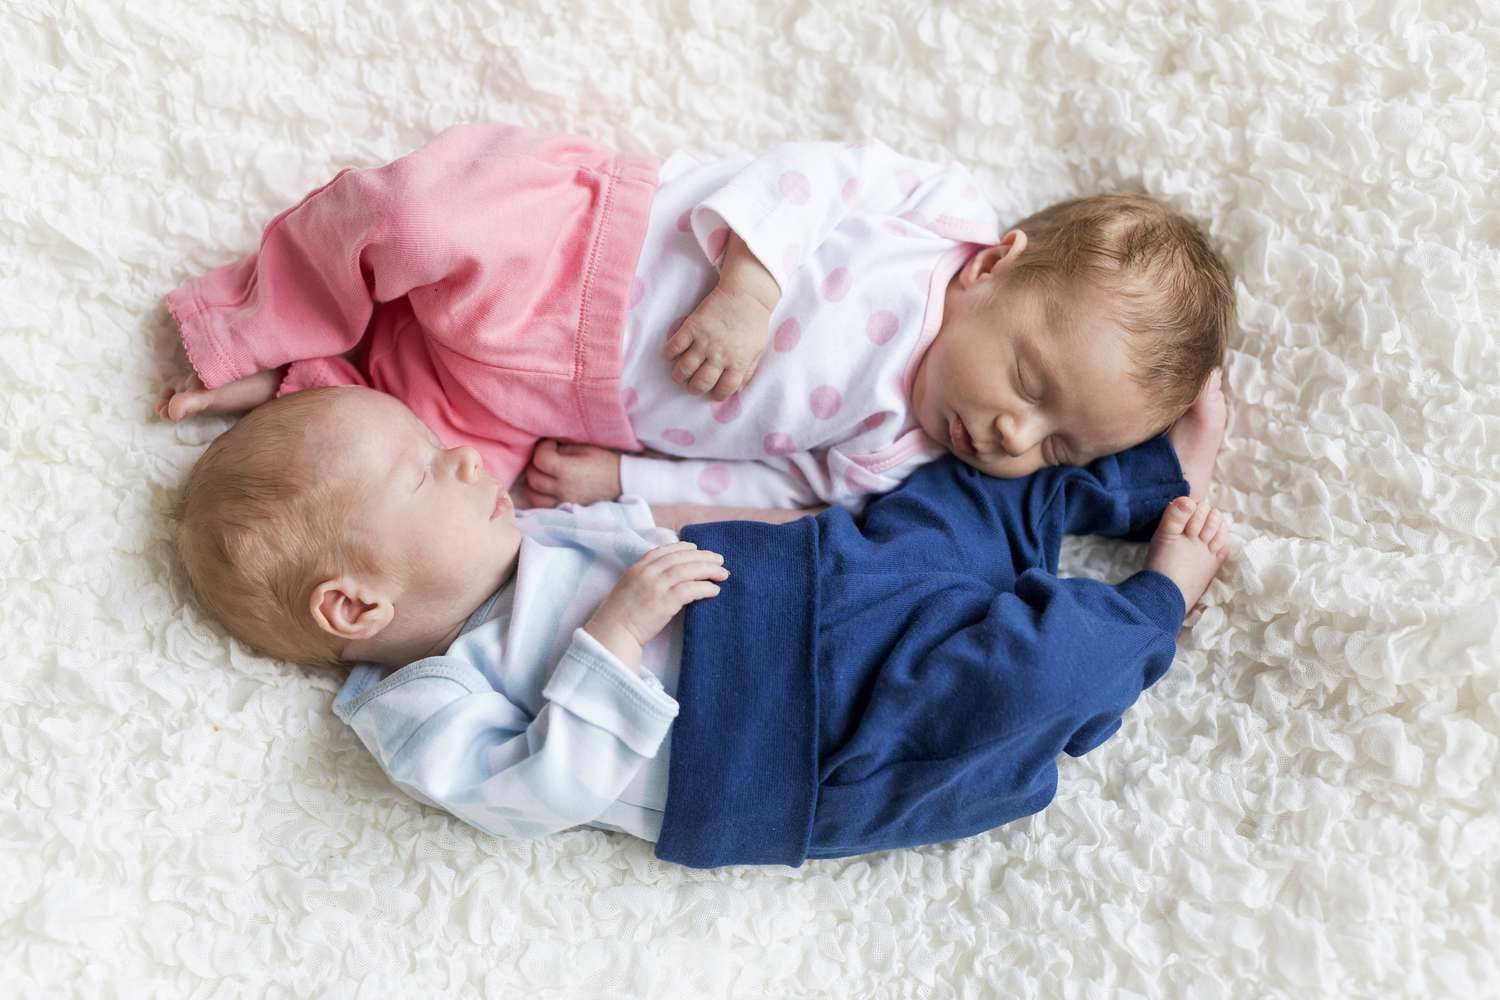 newborn-twins-sleeping-on-white-blanket-588498133-5ad8d7630e23d900366ad8fb.jpeg